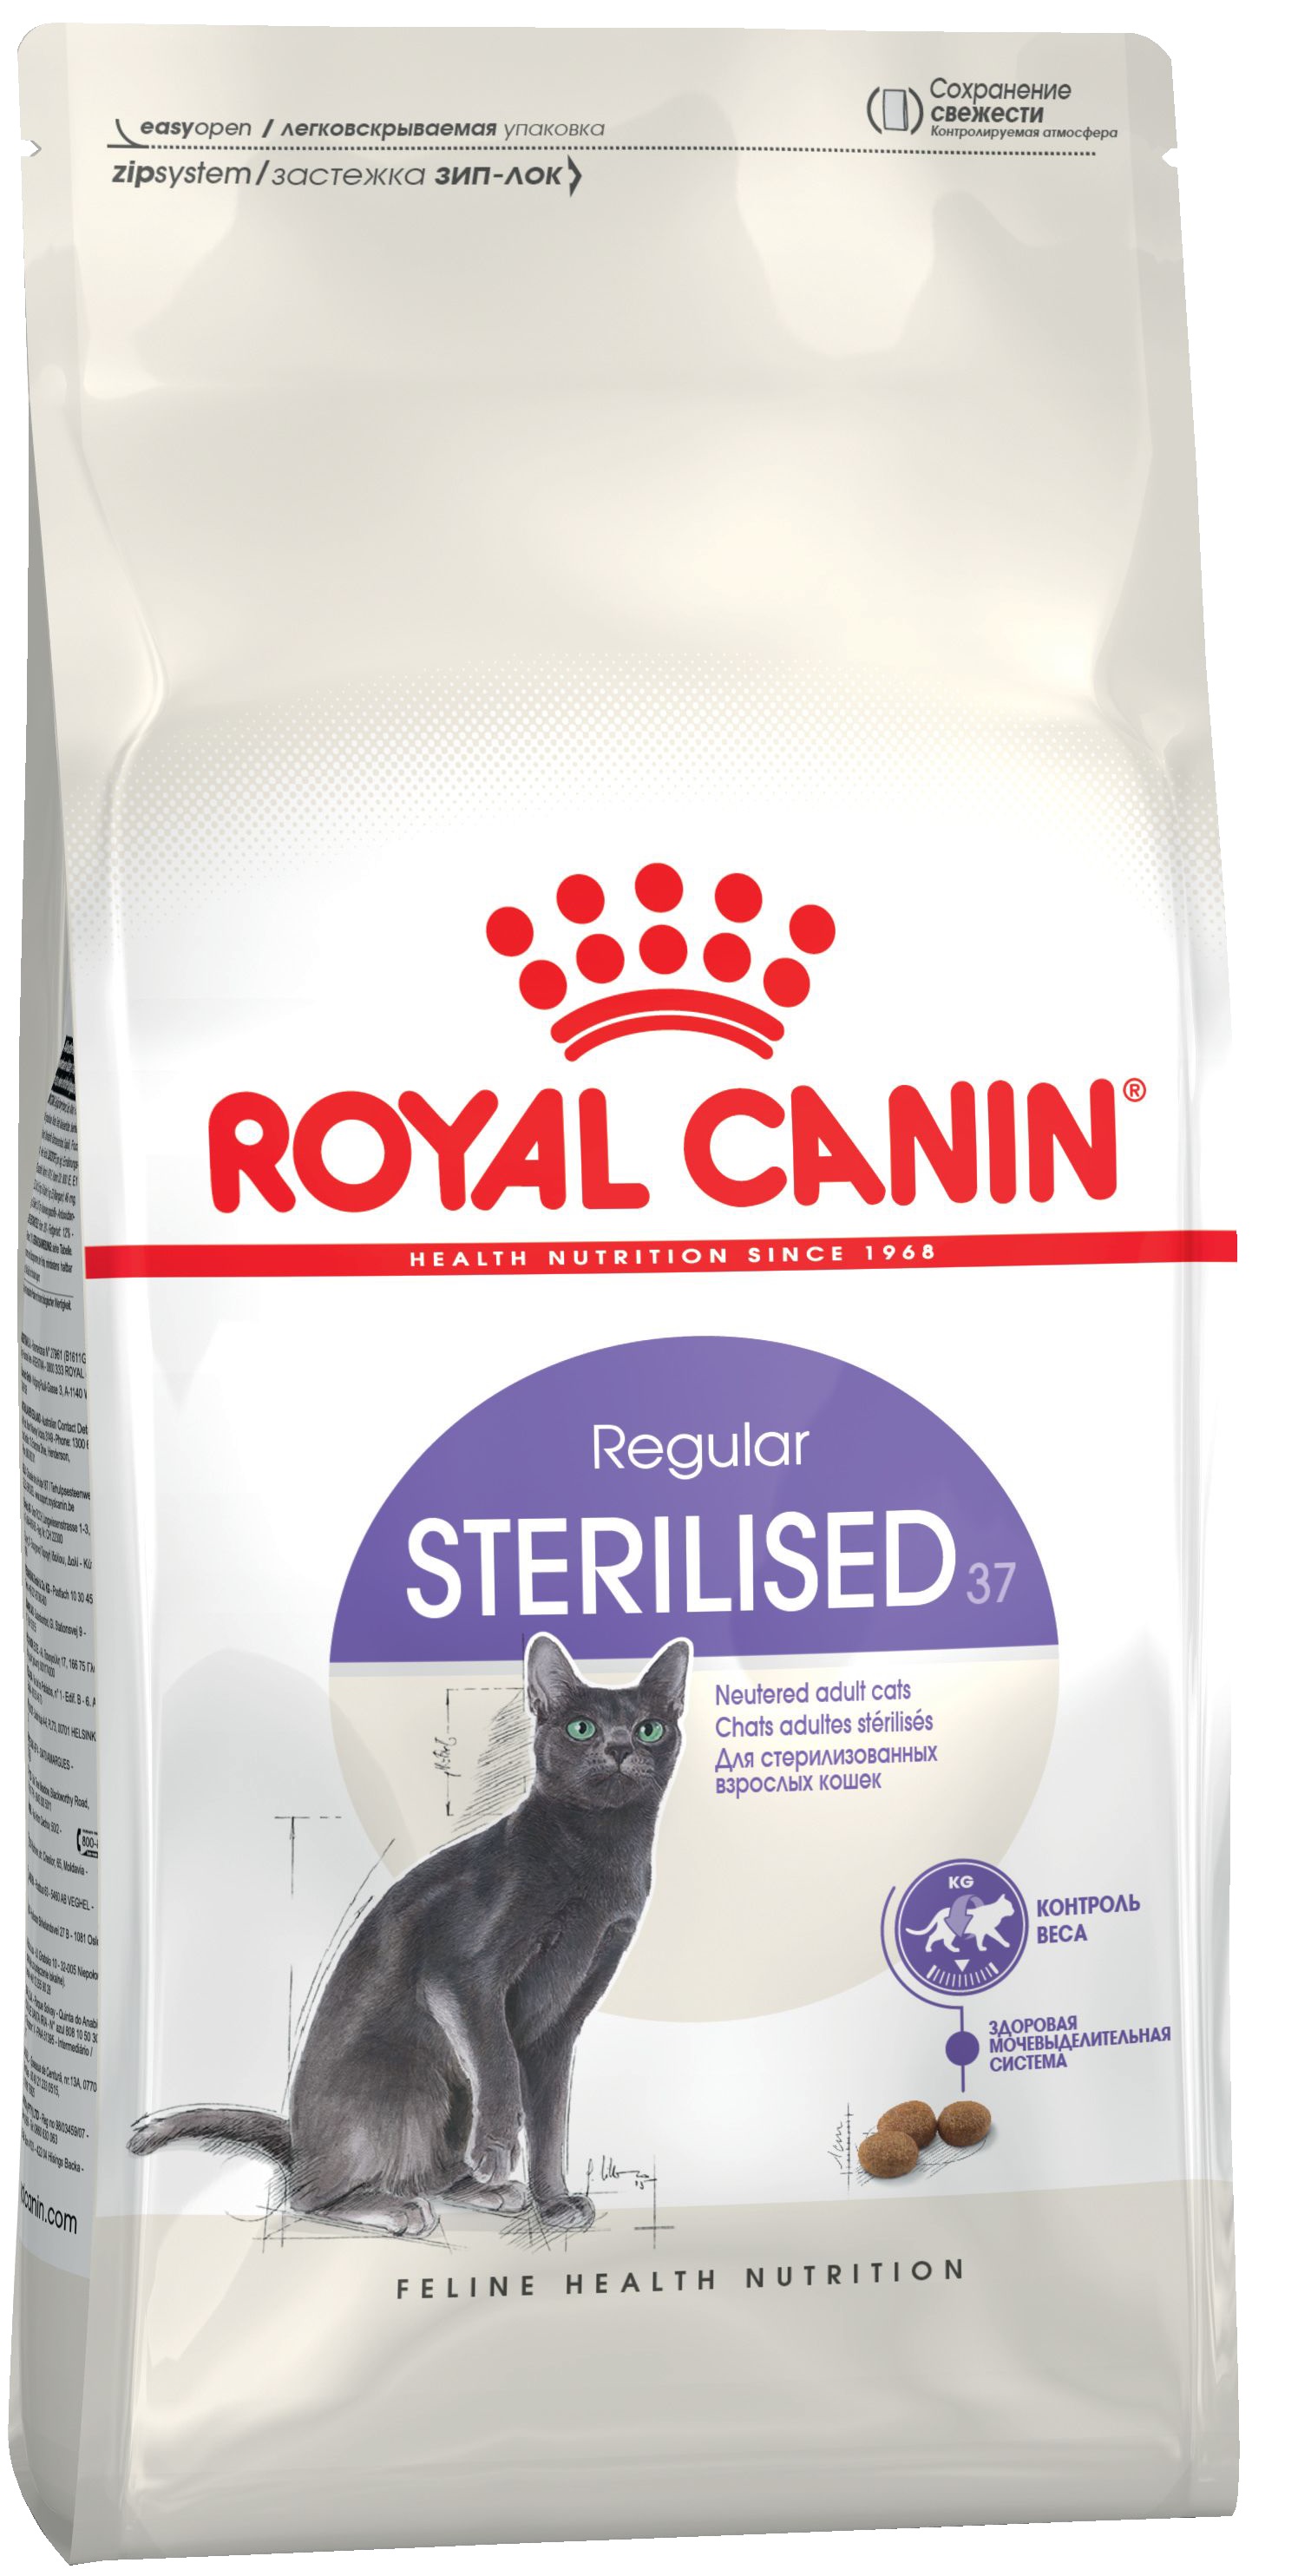 Сухой корм для кошек ROYAL CANIN Sterilised 37, для стерилизованных, 0,4кг